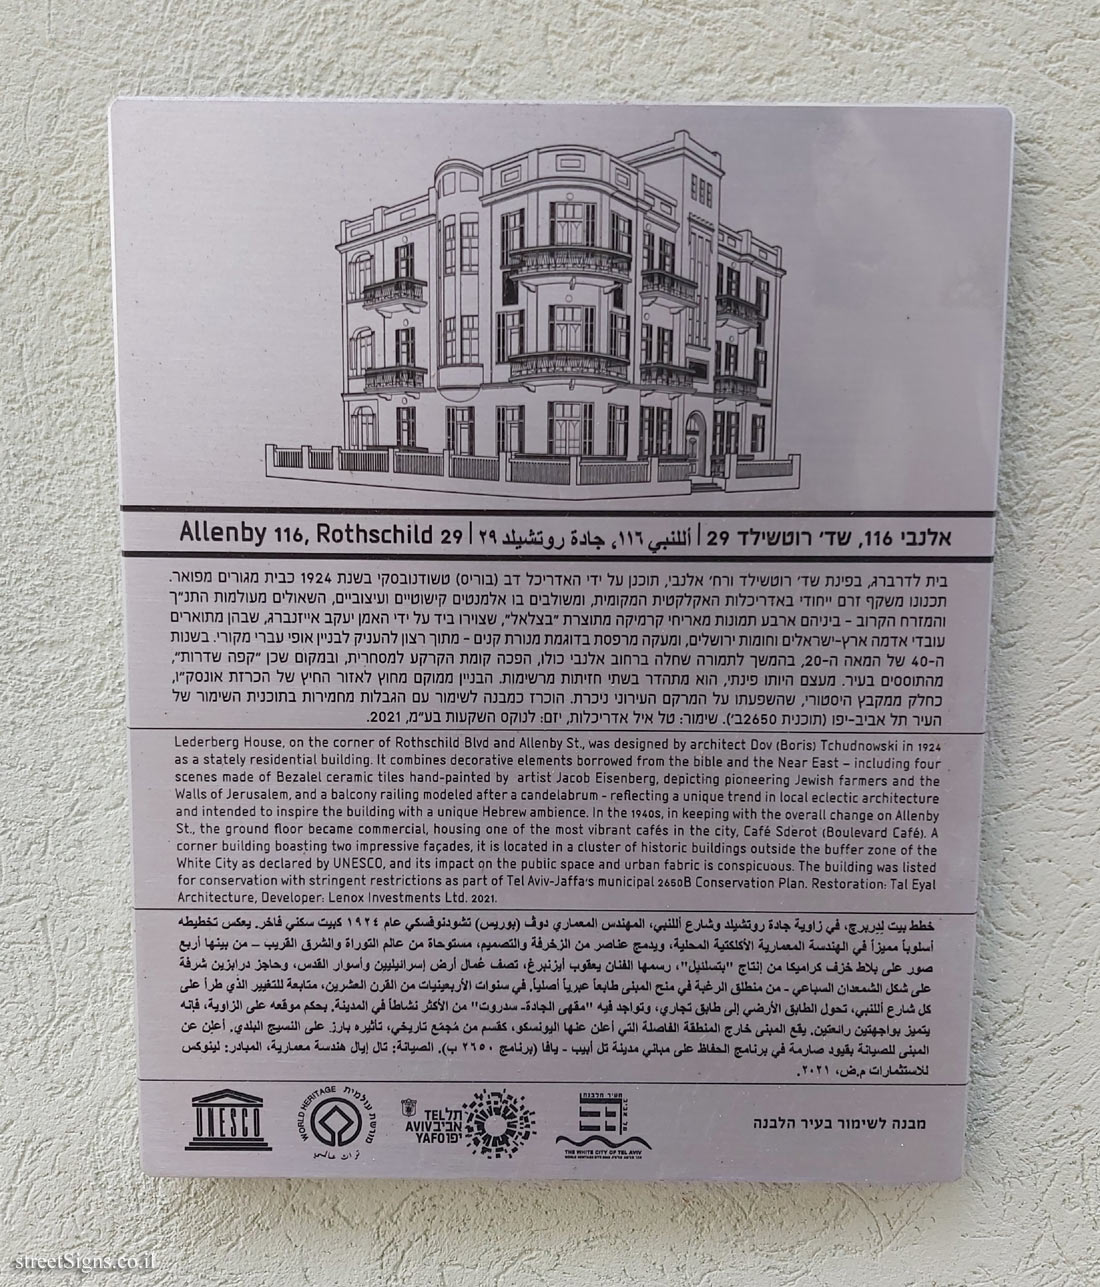 Tel Aviv - buildings for conservation - 116 Allenby, Rothschild 20